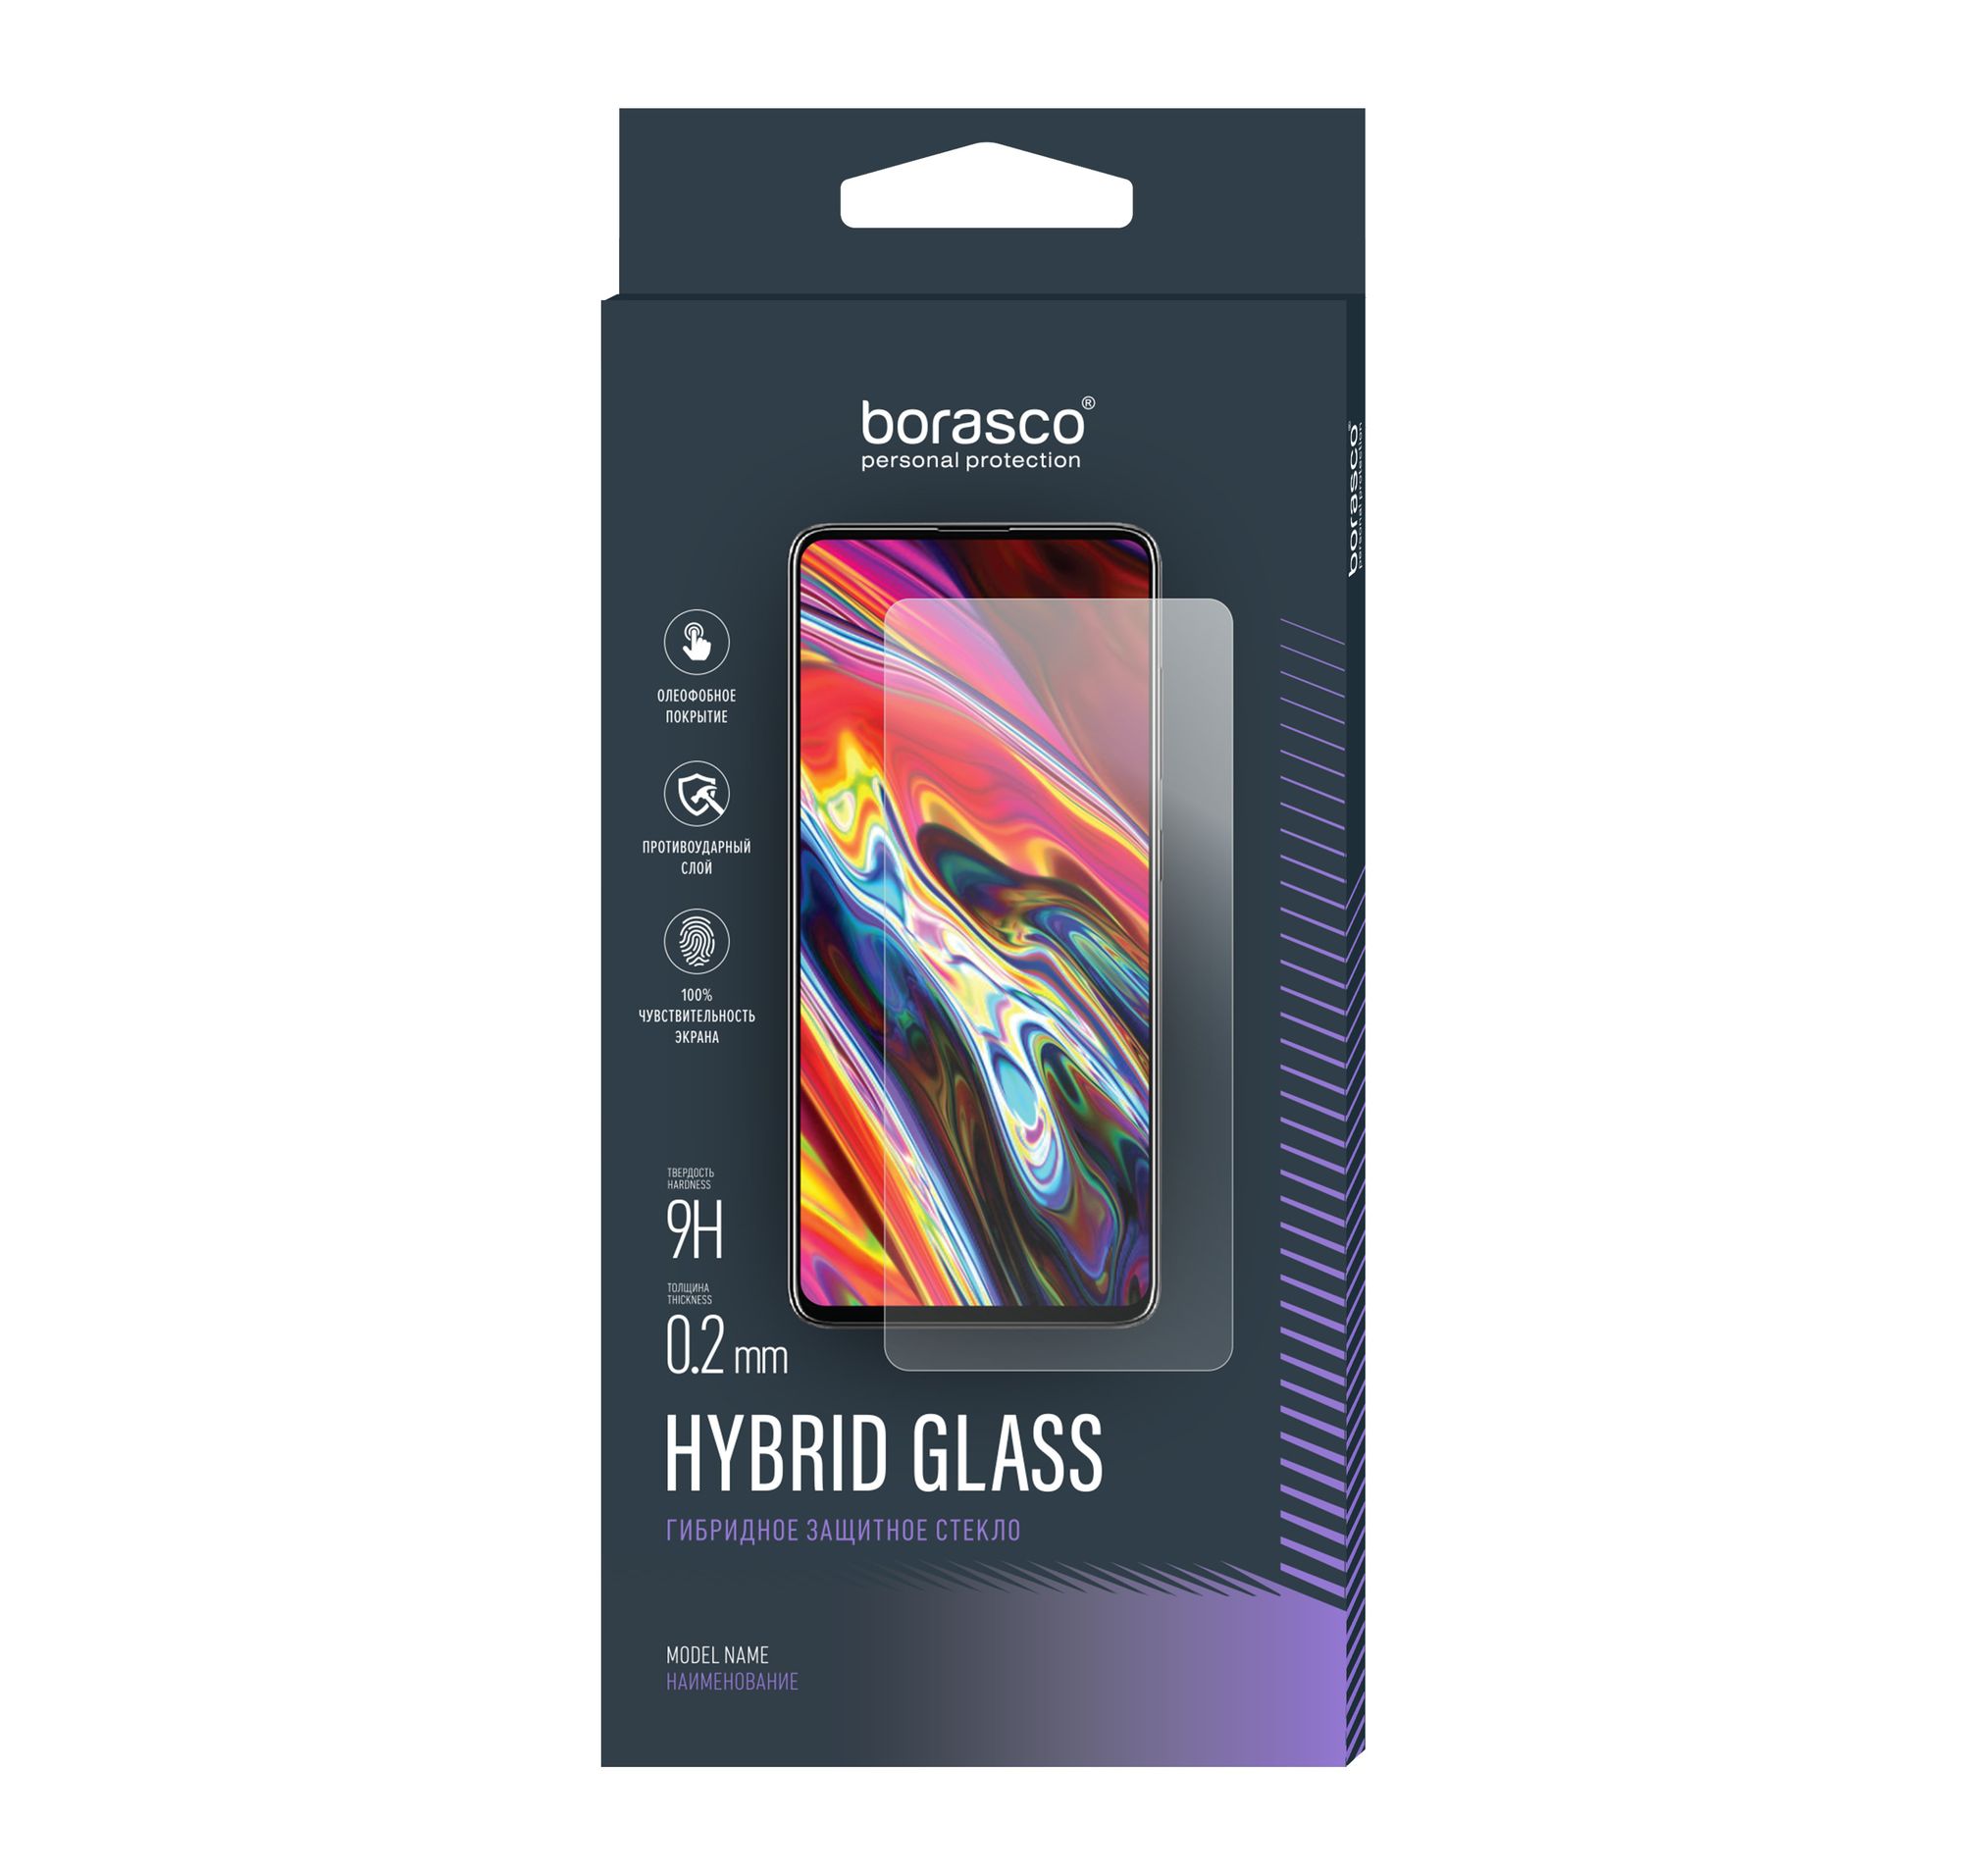 Стекло защитное Hybrid Glass VSP 0,26 мм для Sony Xperia 1 (2019)